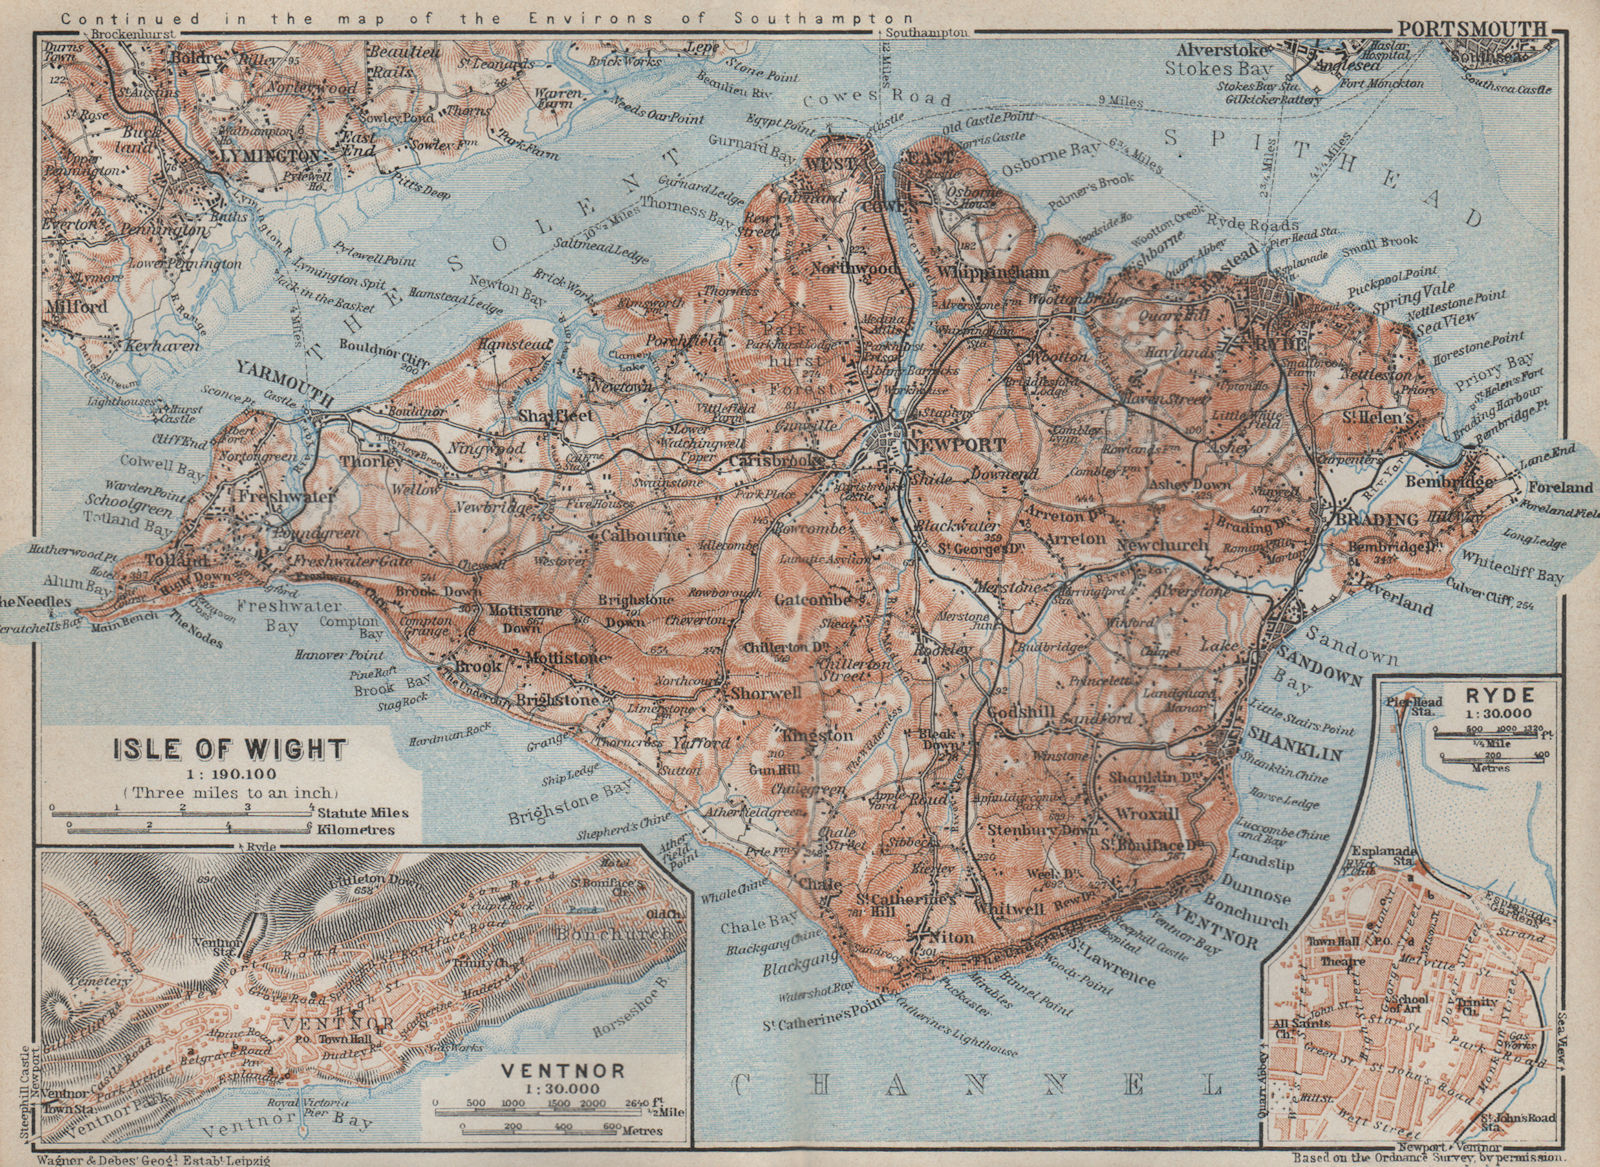 ISLE OF WIGHT Railways. VENTNOR & RYDE antique town plans. BAEDEKER 1927 map